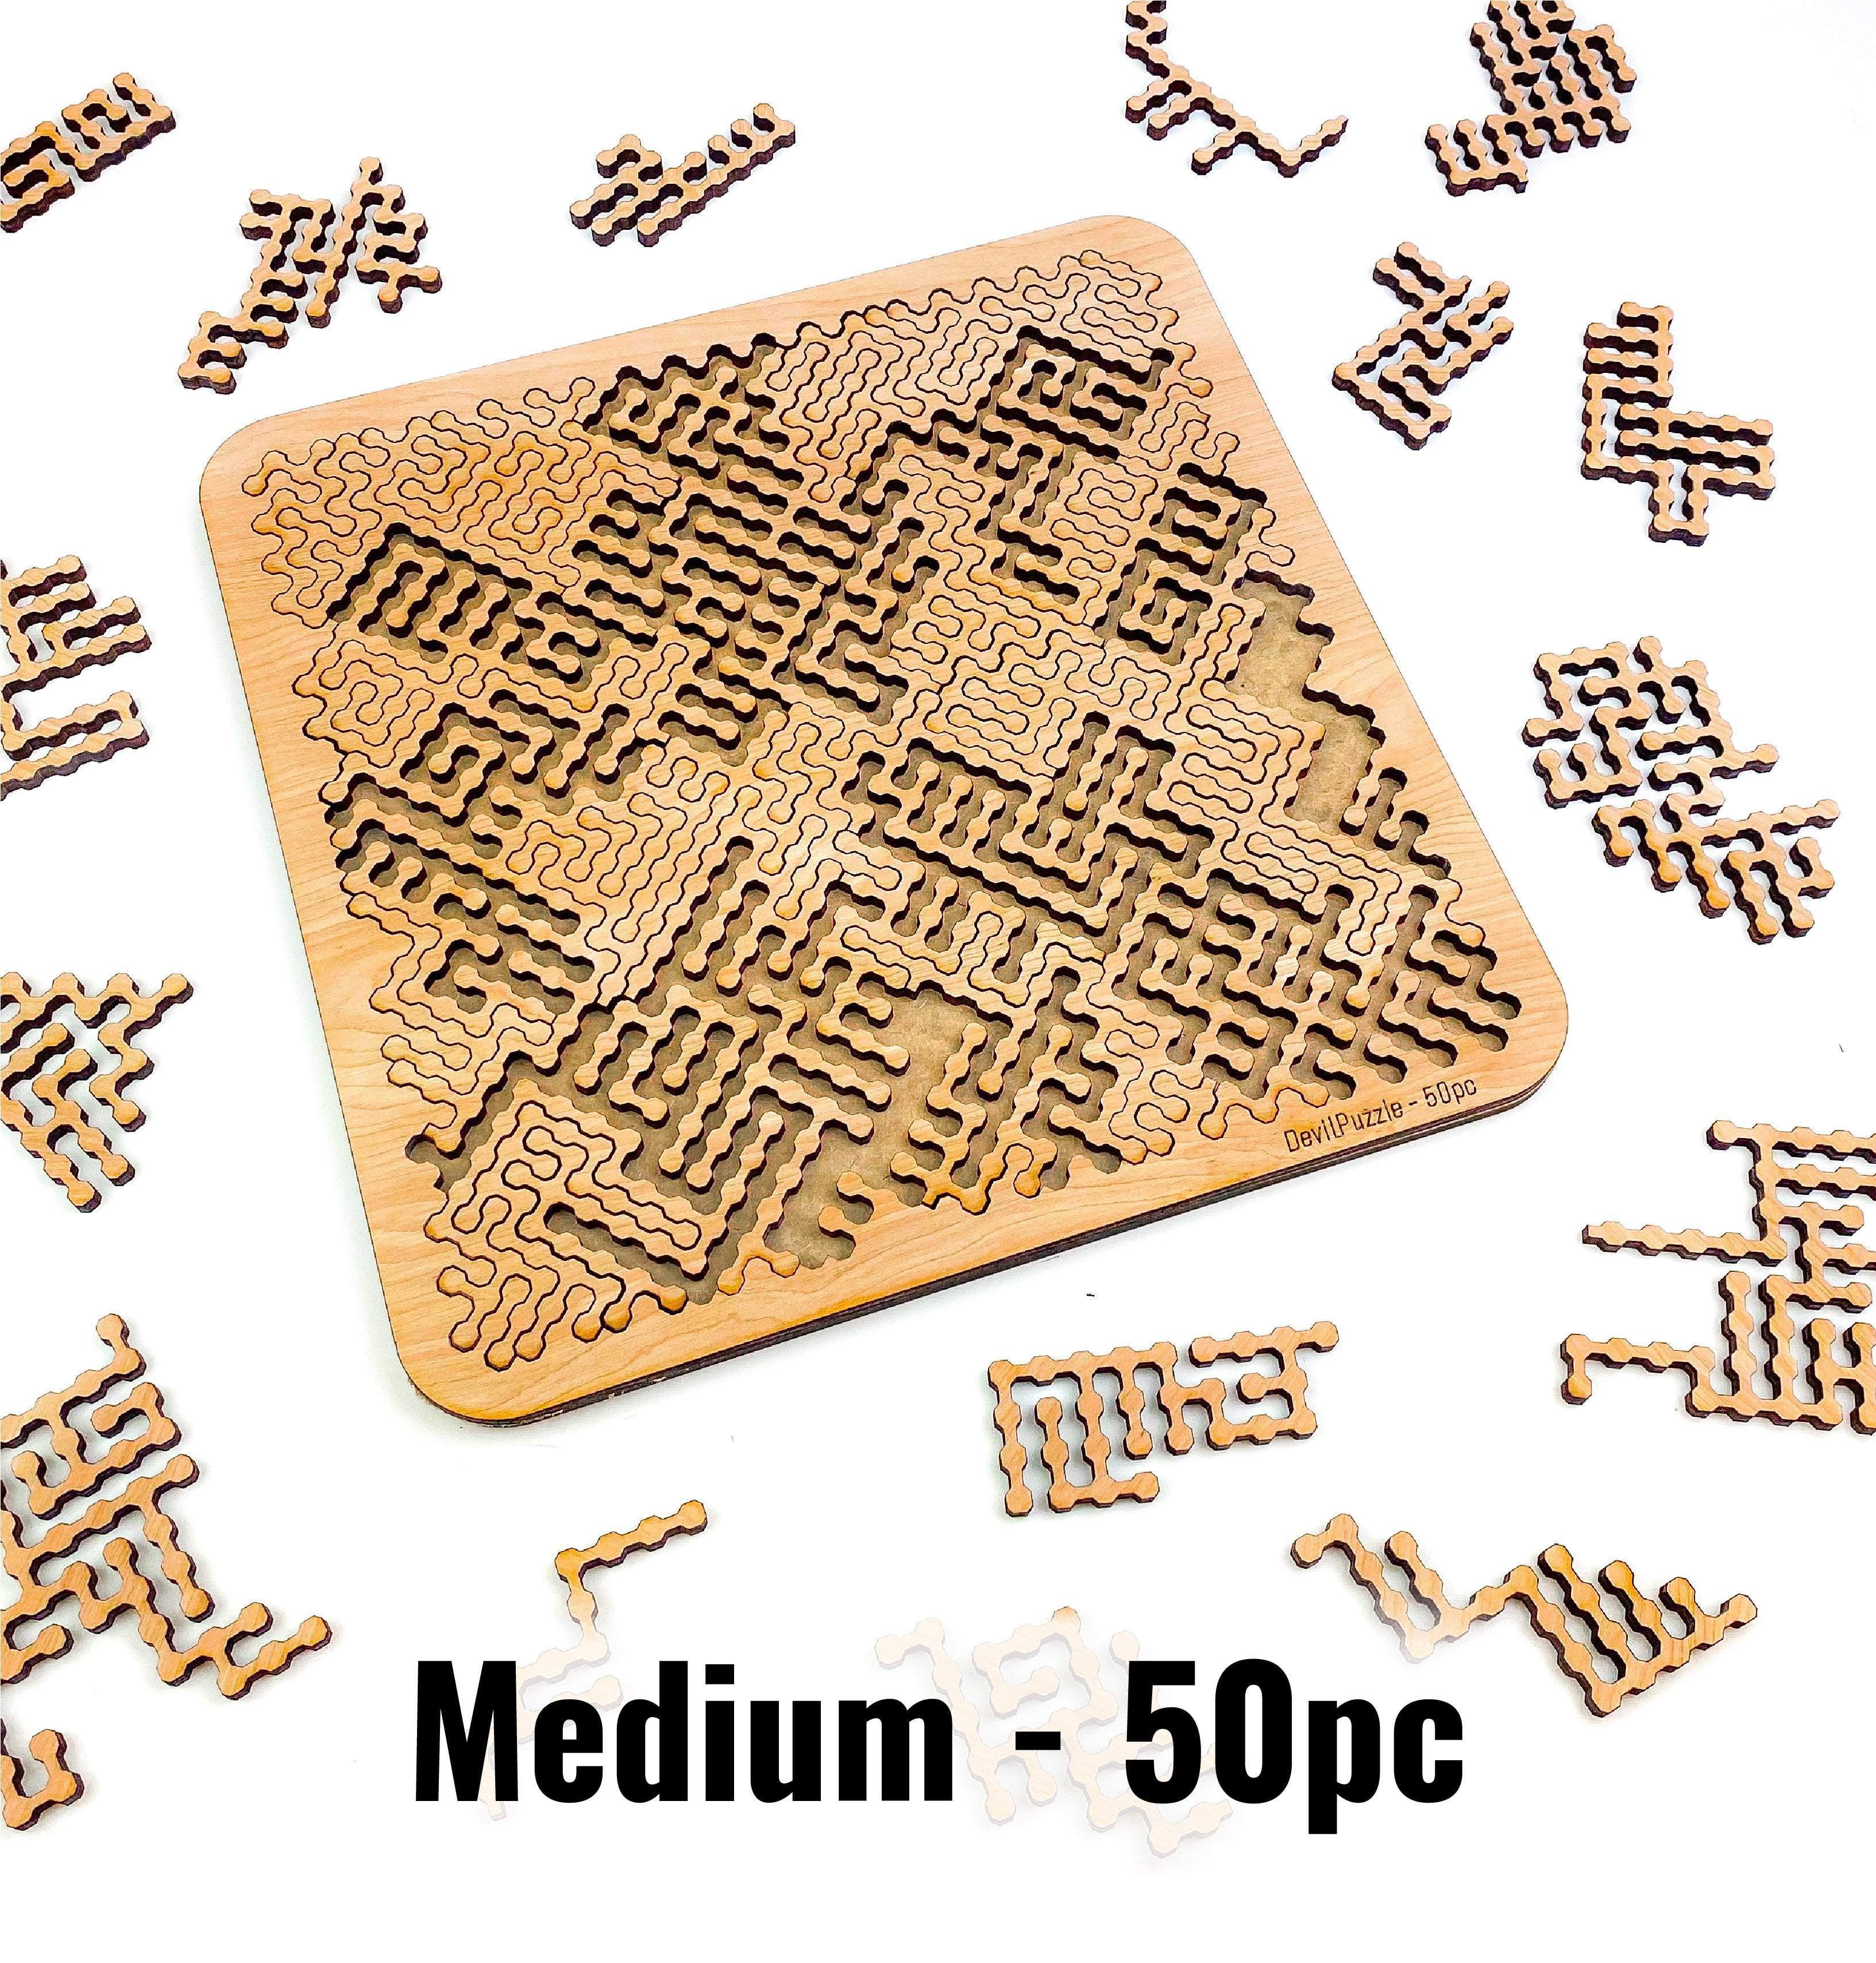 Torched Products Puzzle Medium (50 pieces) Mind Bending Octagonal Fractal Puzzle